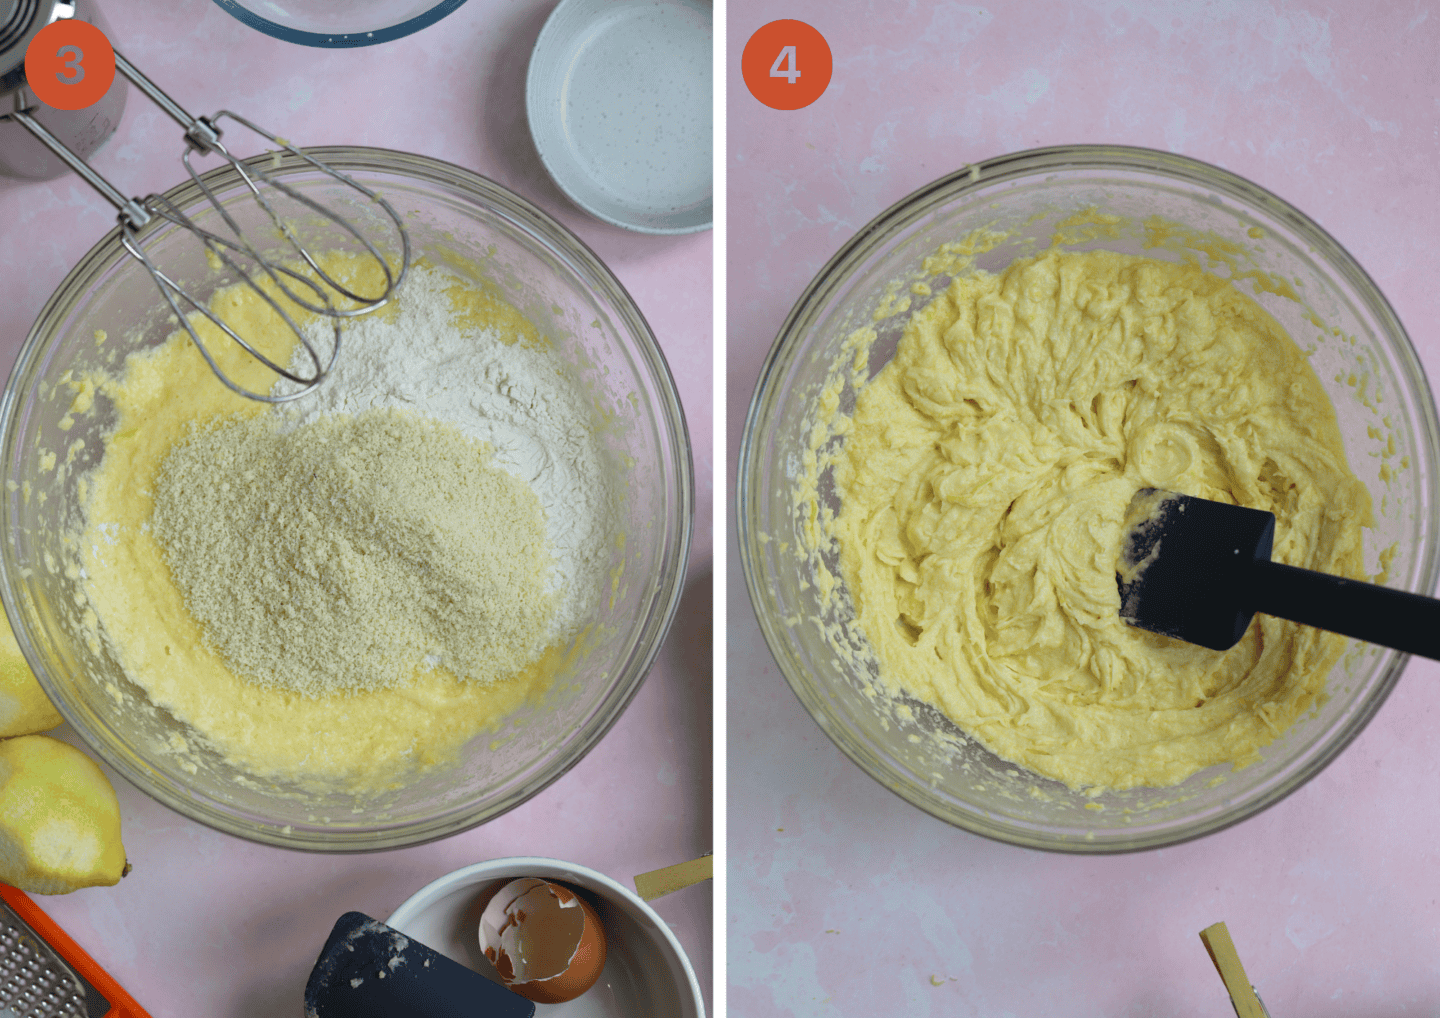 Mixing gluten free flour into the lemon drizzle cake batter.